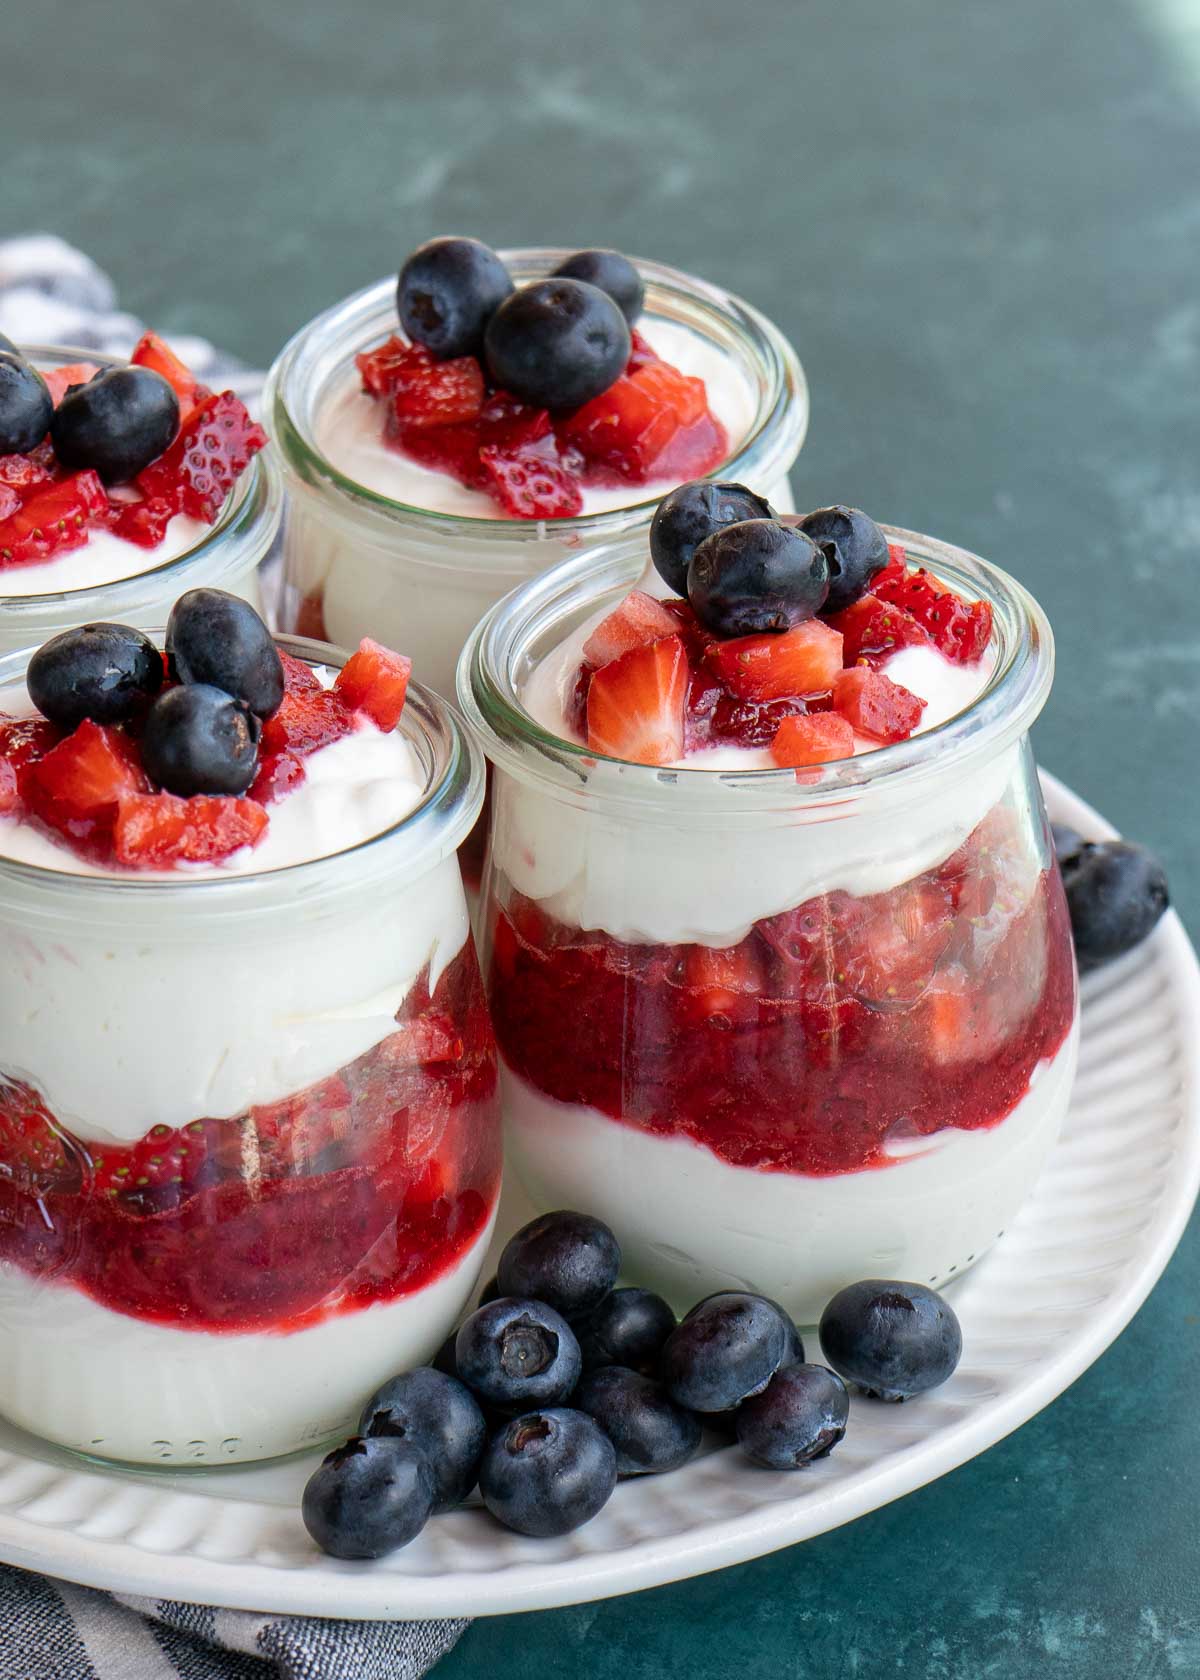 Delicious no-bake lemon cheesecake, chocolate covered strawberries, and Greek yogurt berry parfait